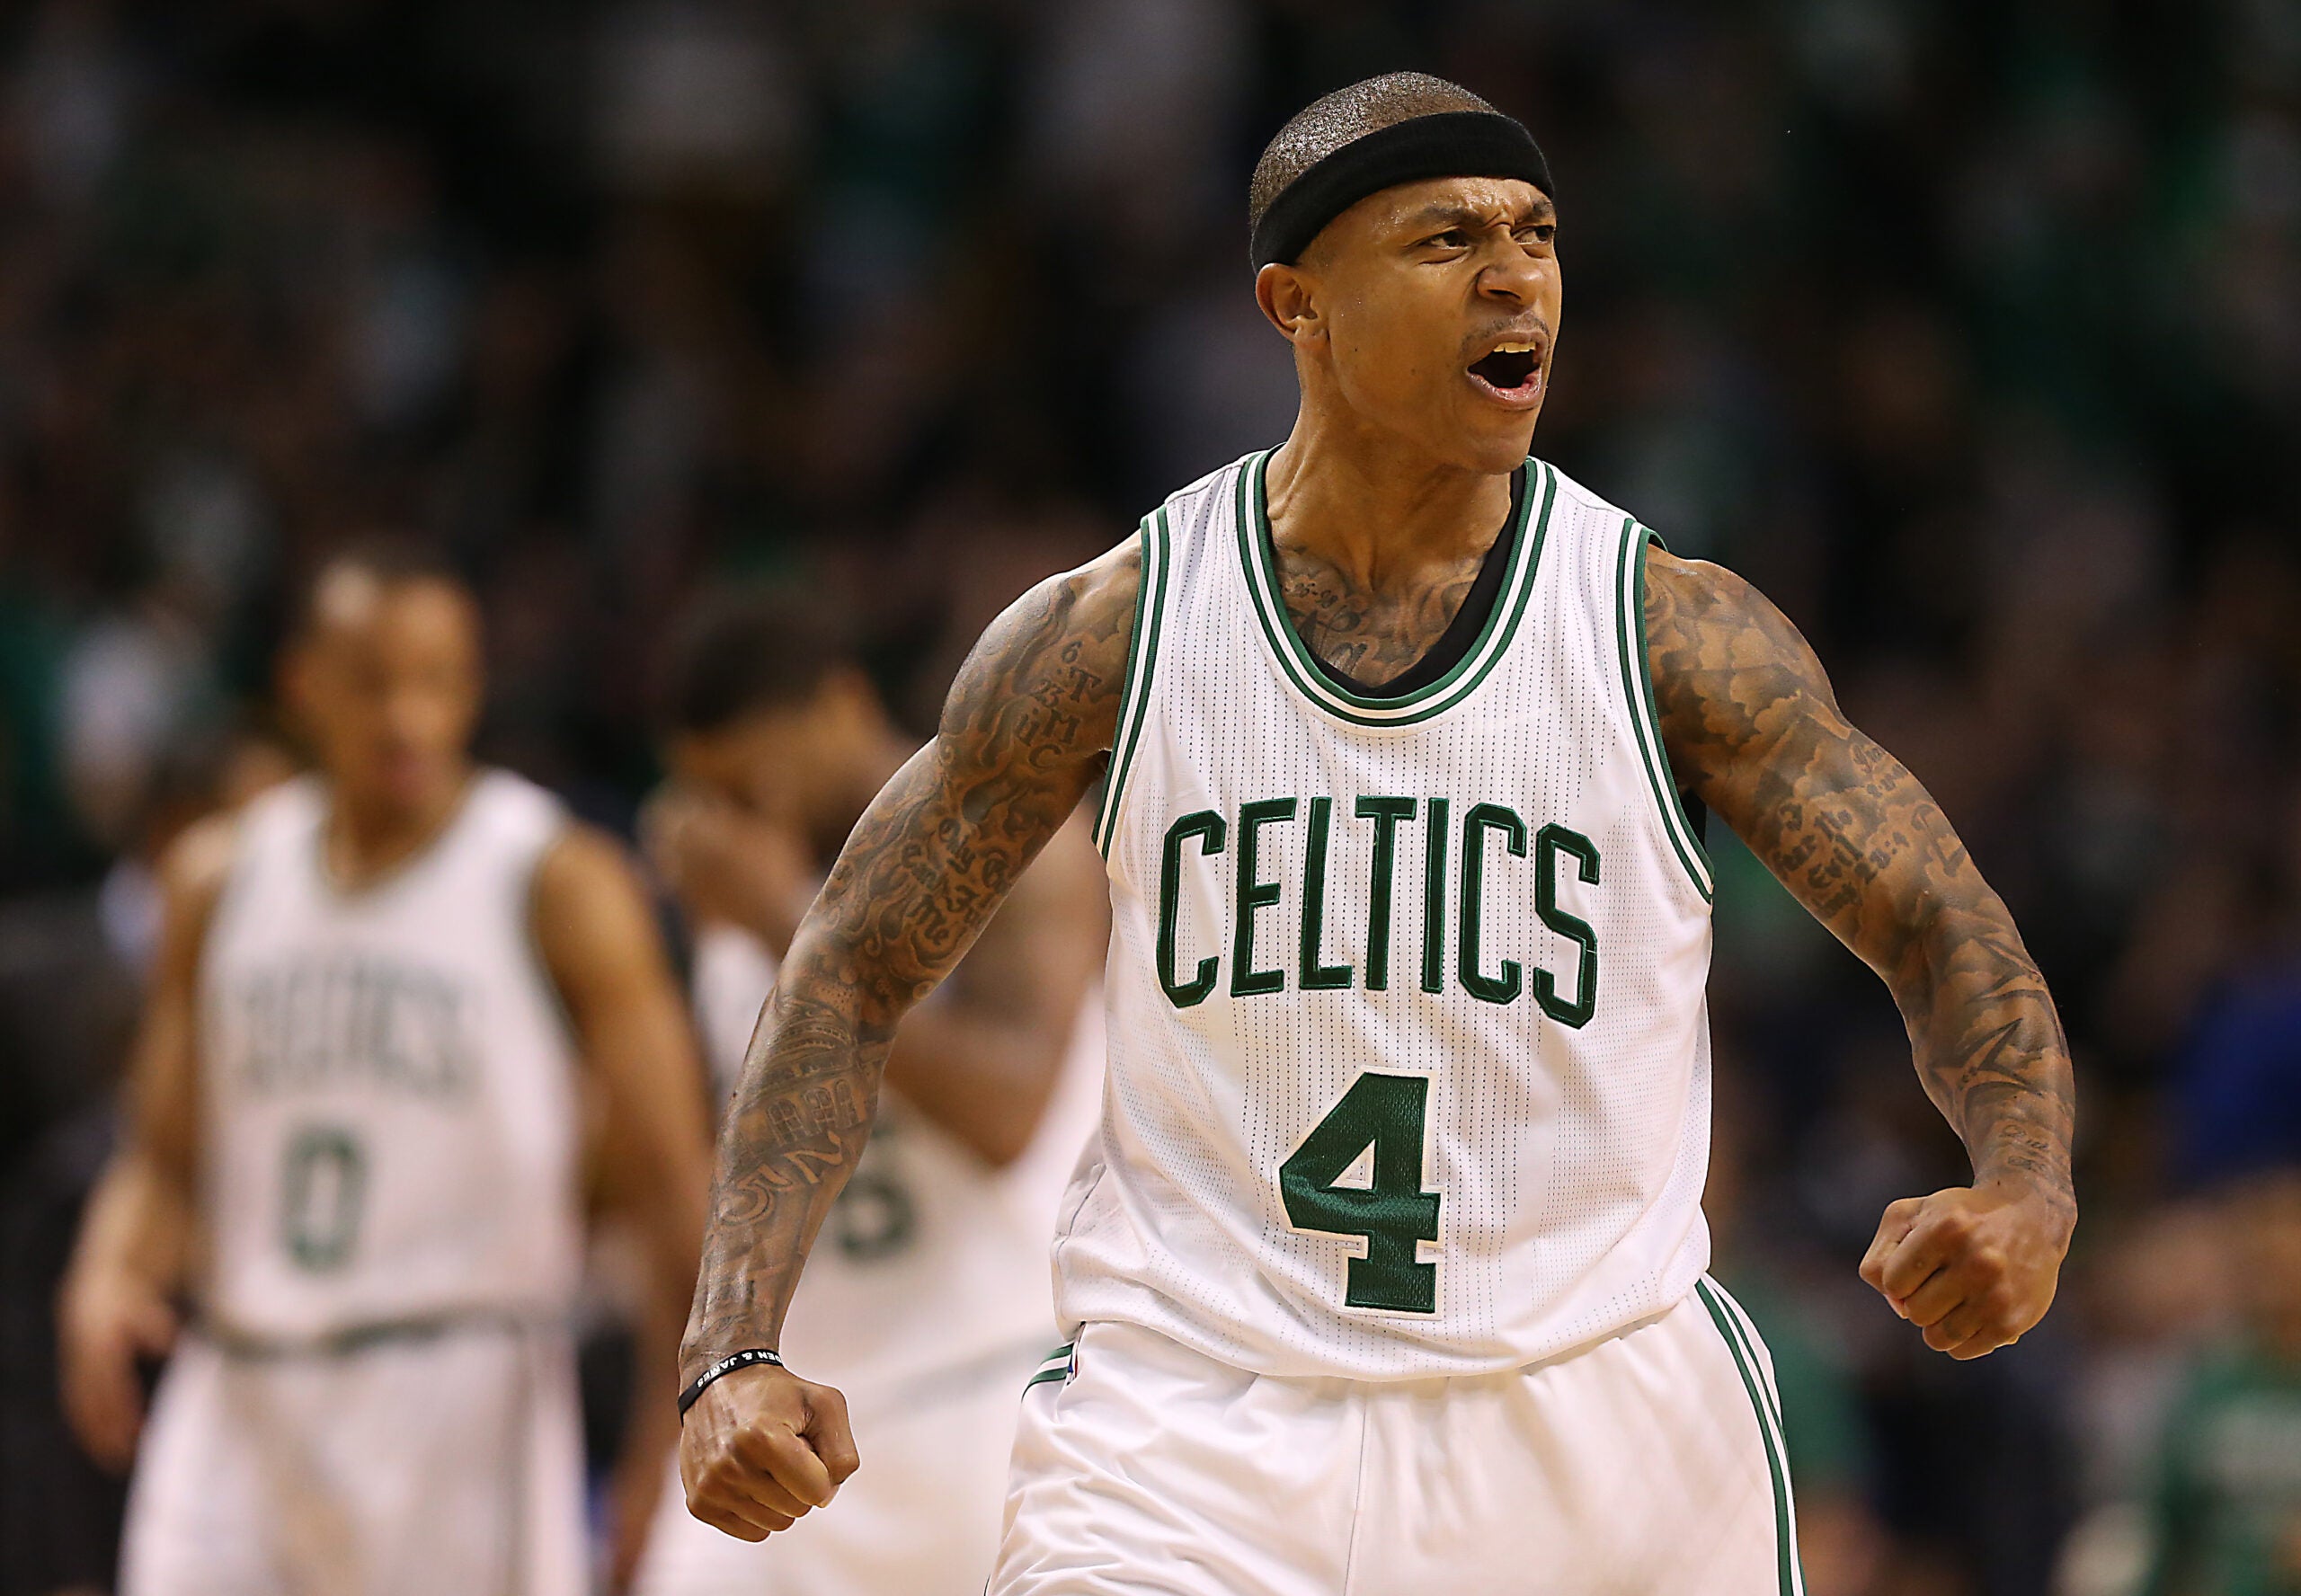 Celtics' forward Brandon Bass adjusts his game - The Boston Globe